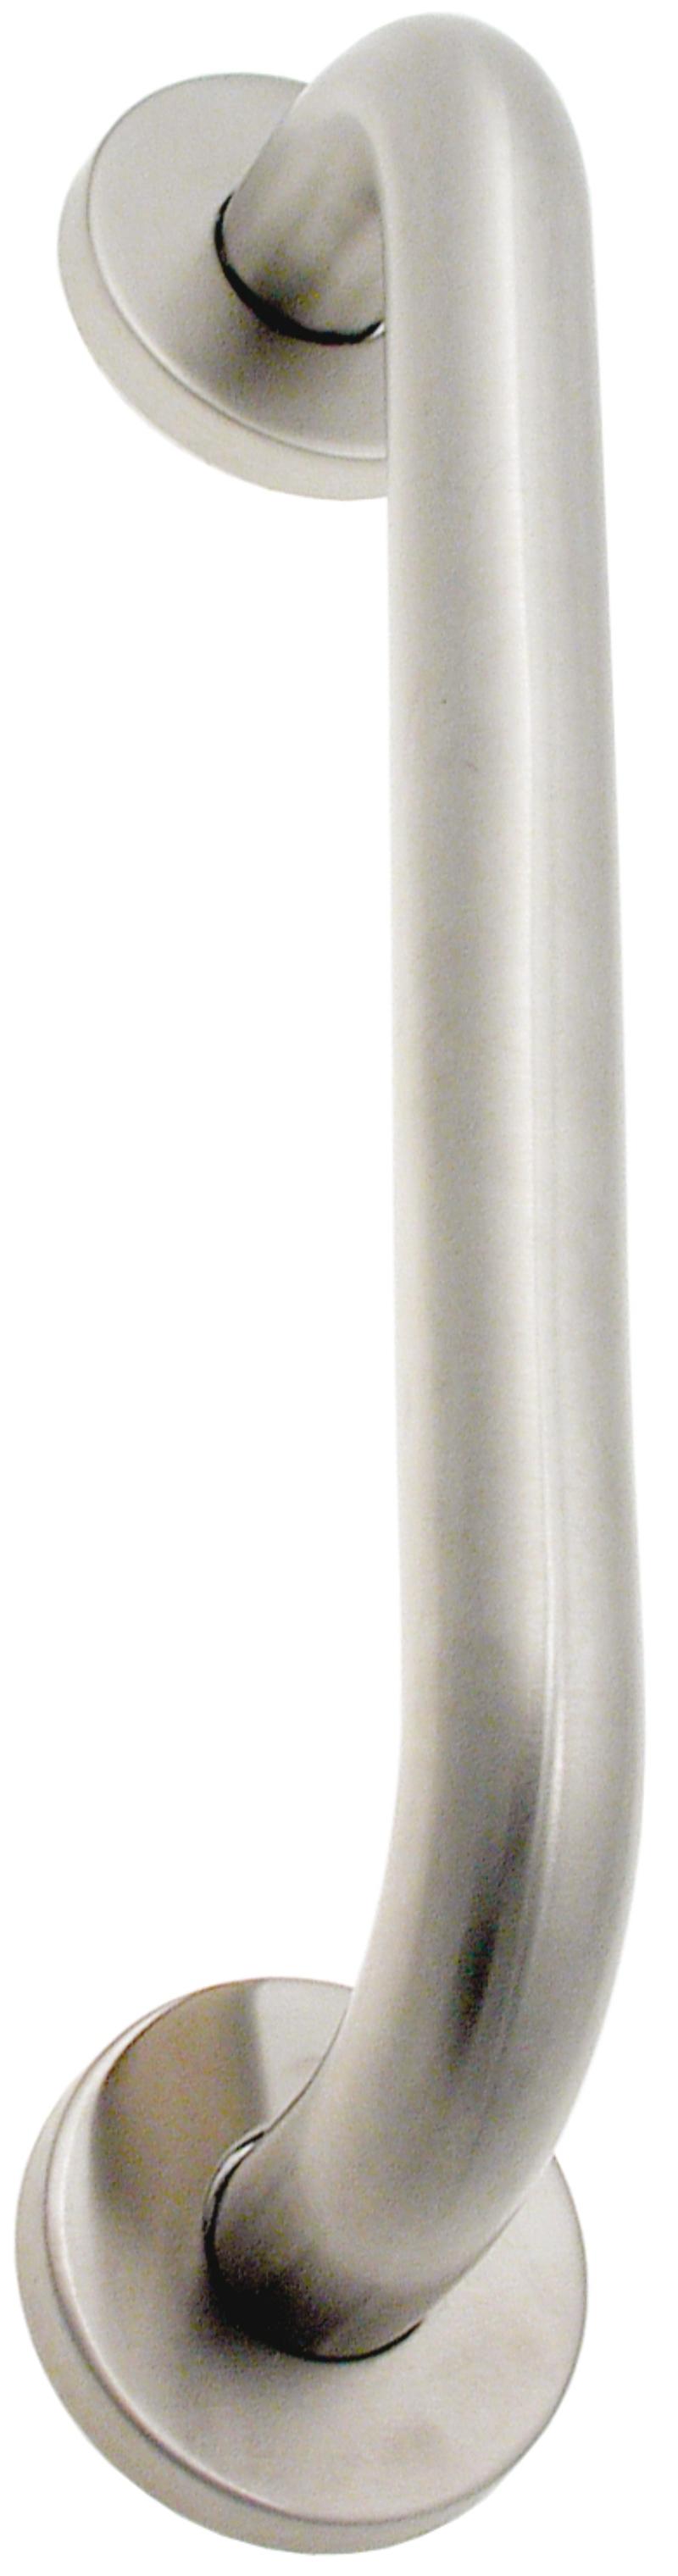 Ruko scanflex dörrhandtag, rak med rosett 19x200 enkel